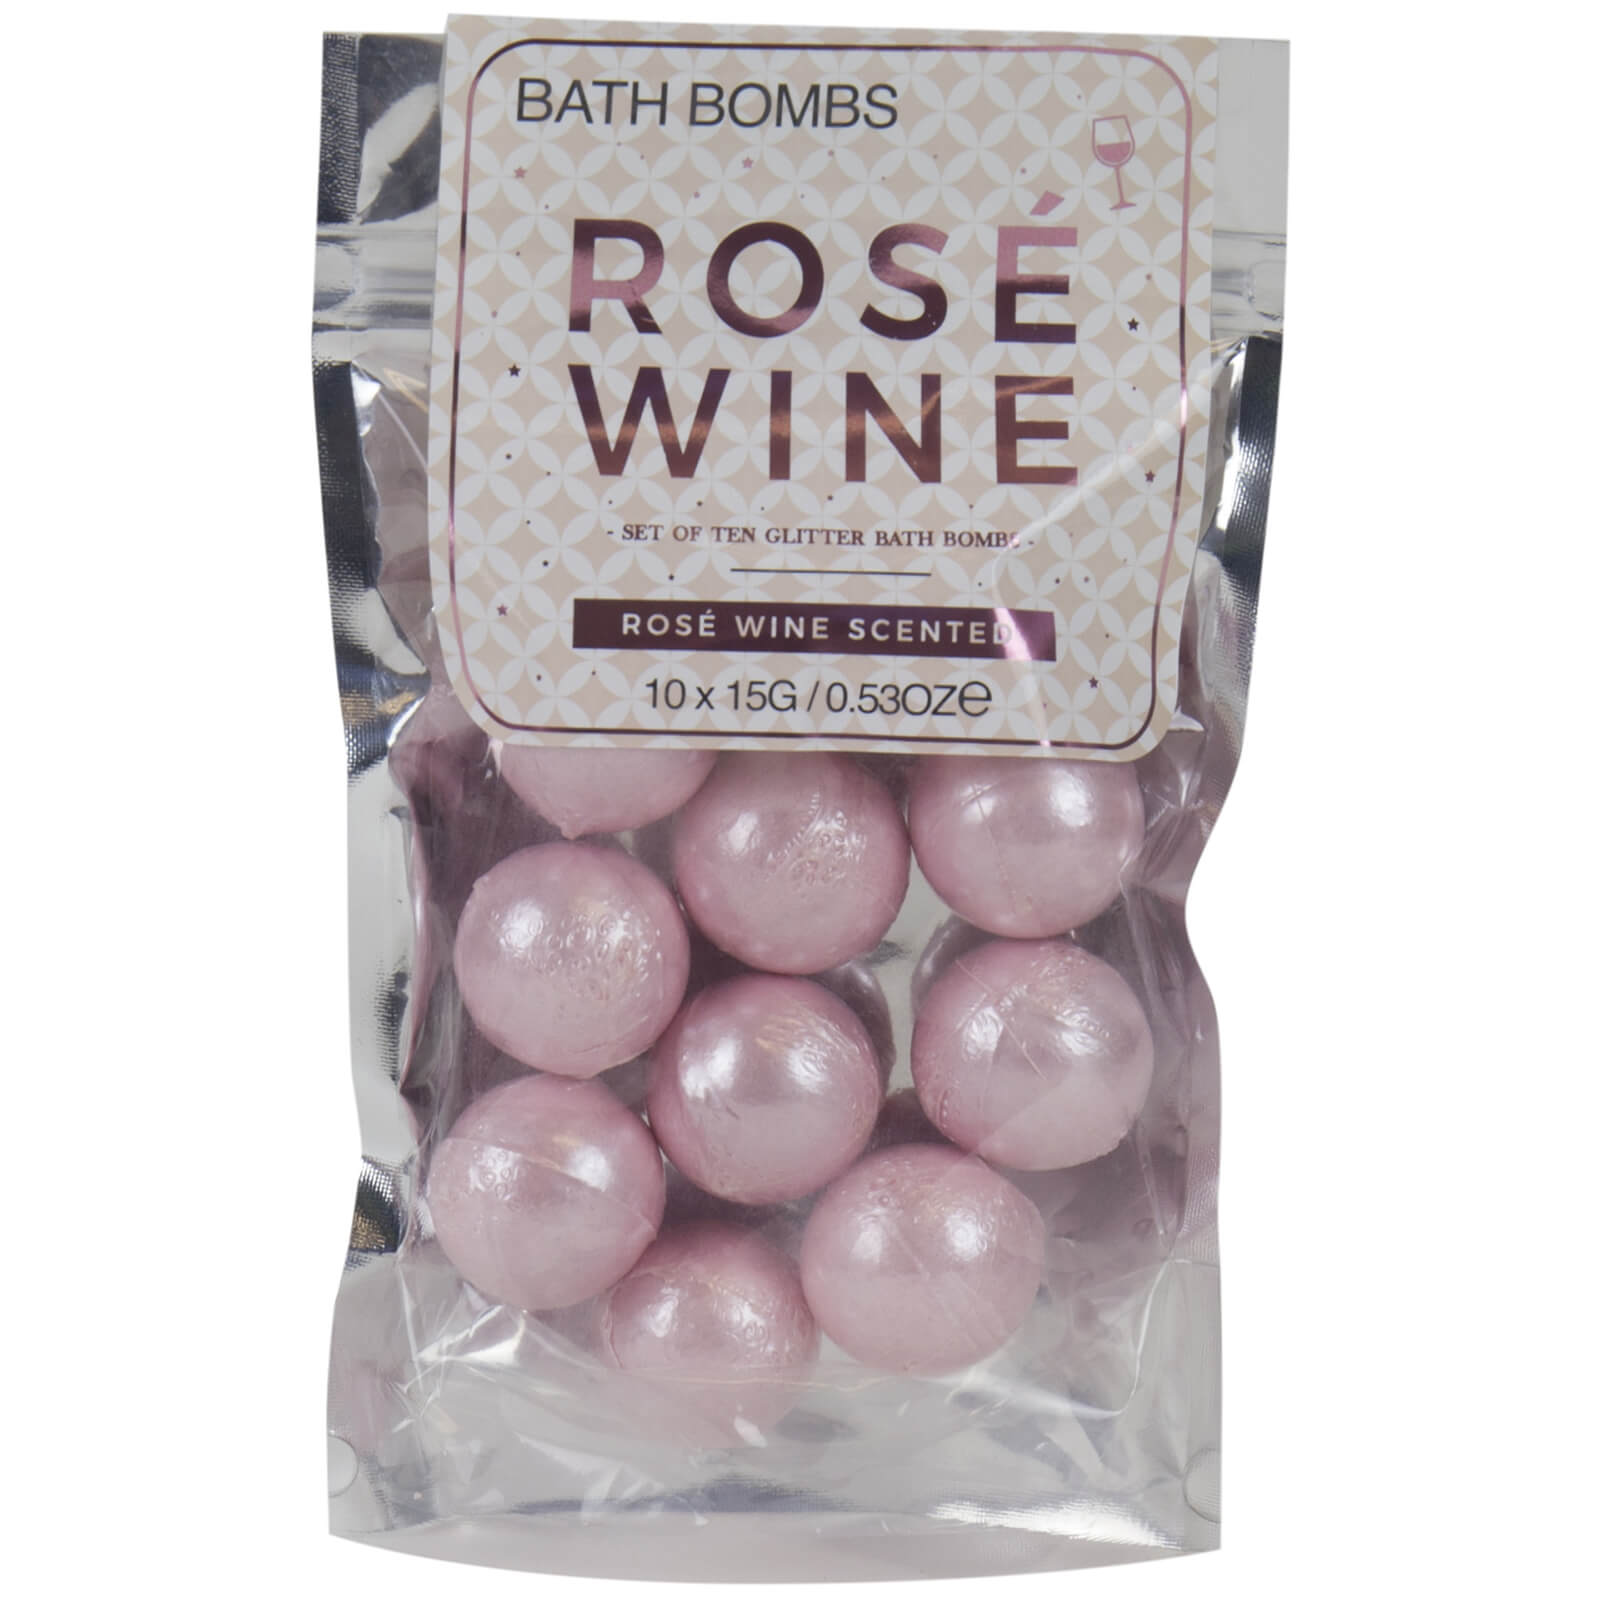 Rose Wine Bath Bombs